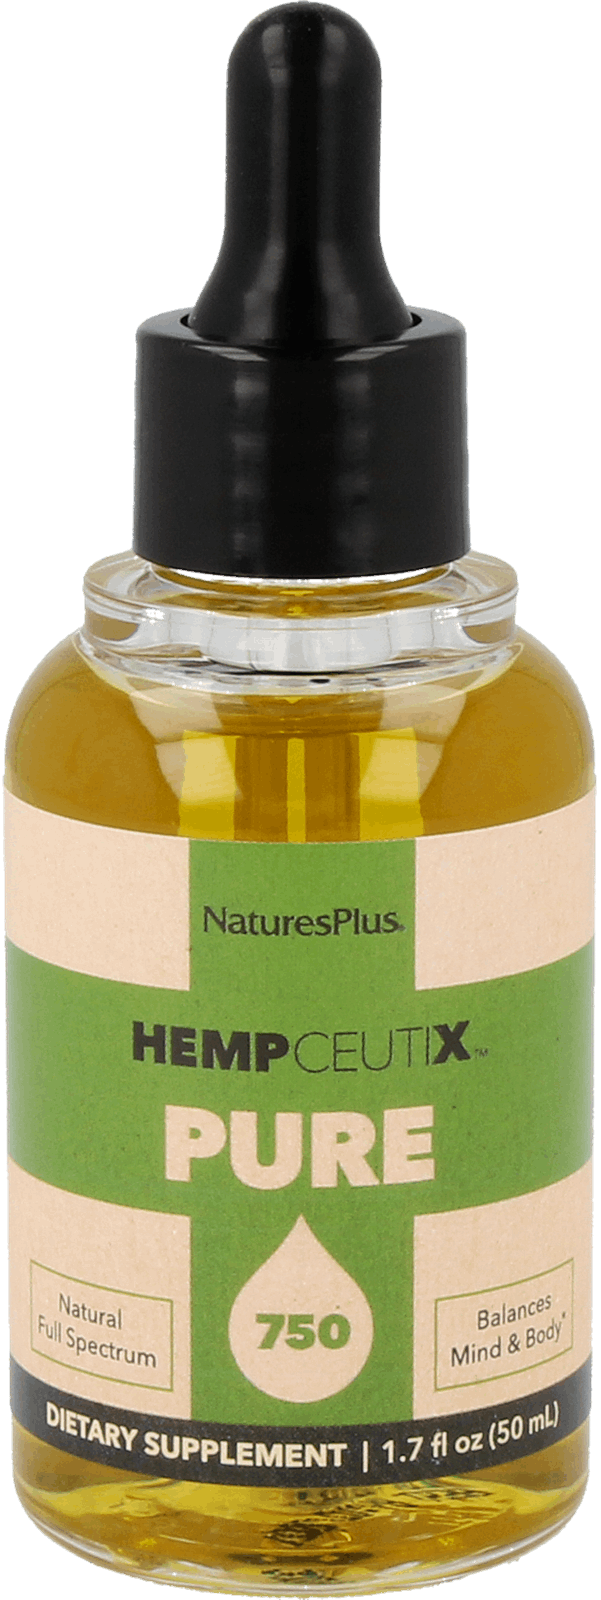 HempCeutix™ Pure 750 Hemp Oil 